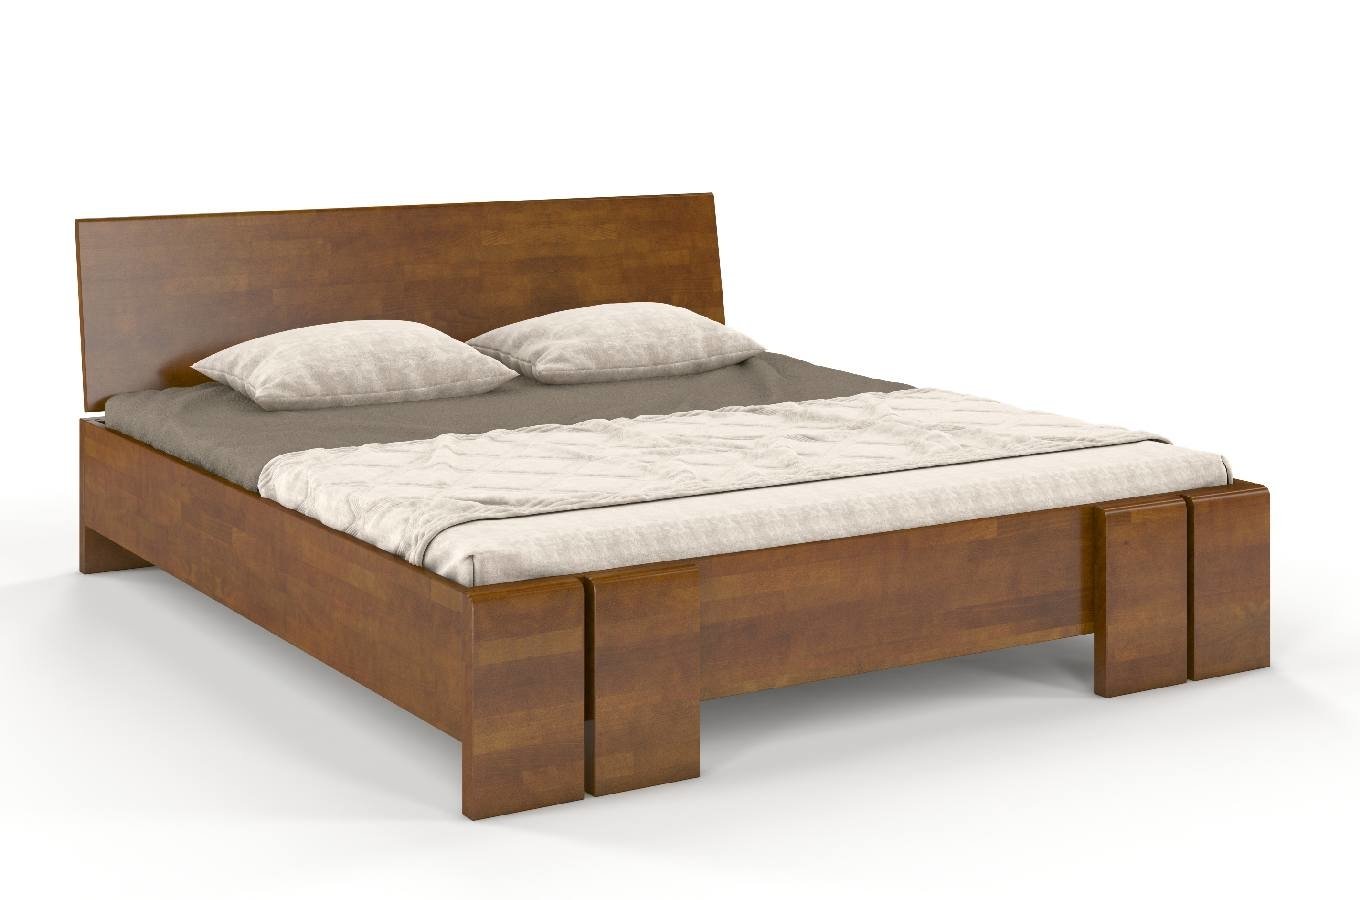 Łóżko drewniane bukowe Skandica VESTRE Maxi & Long / 160x220 cm, kolor orzech